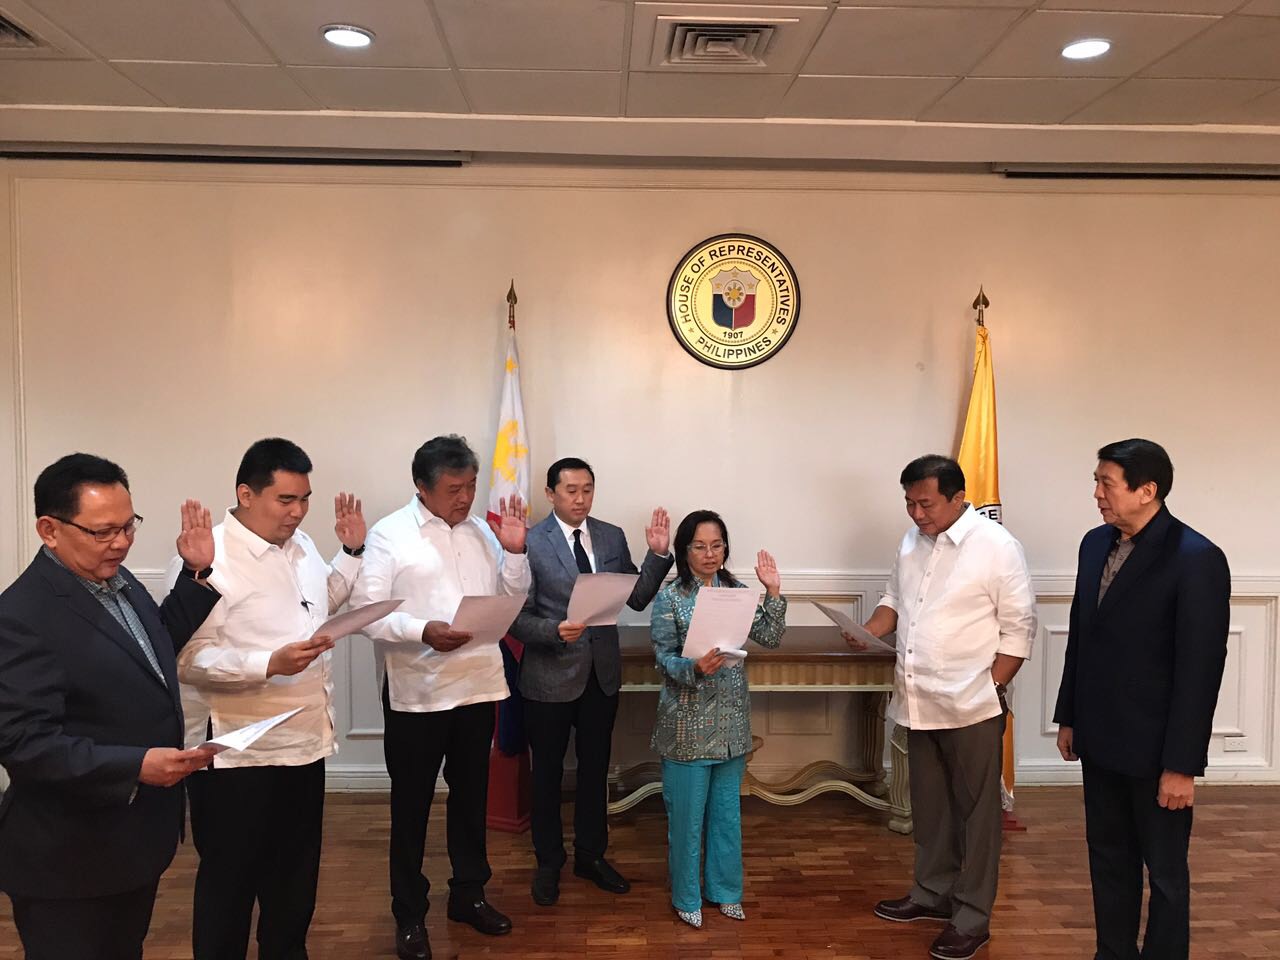 PDP LABAN. Gloria Macapagal Arroyo officially joins the ruling party. Photo courtesy of Representative Rudy Fariñas  